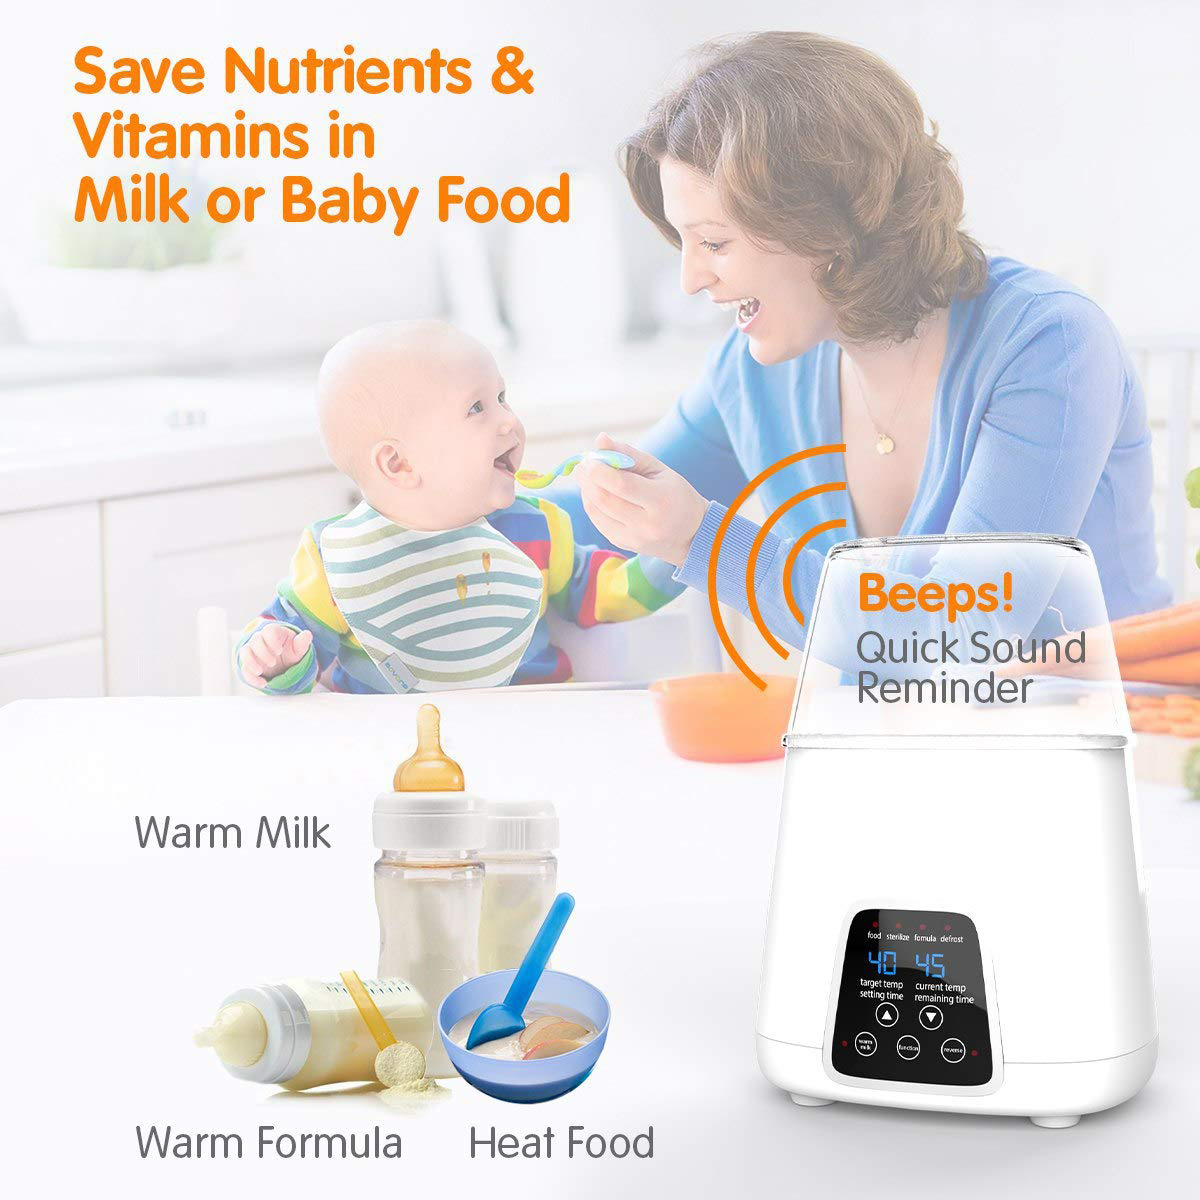 Amazon hot sales Intelligent LCD touch screen baby feeding bottle warmer